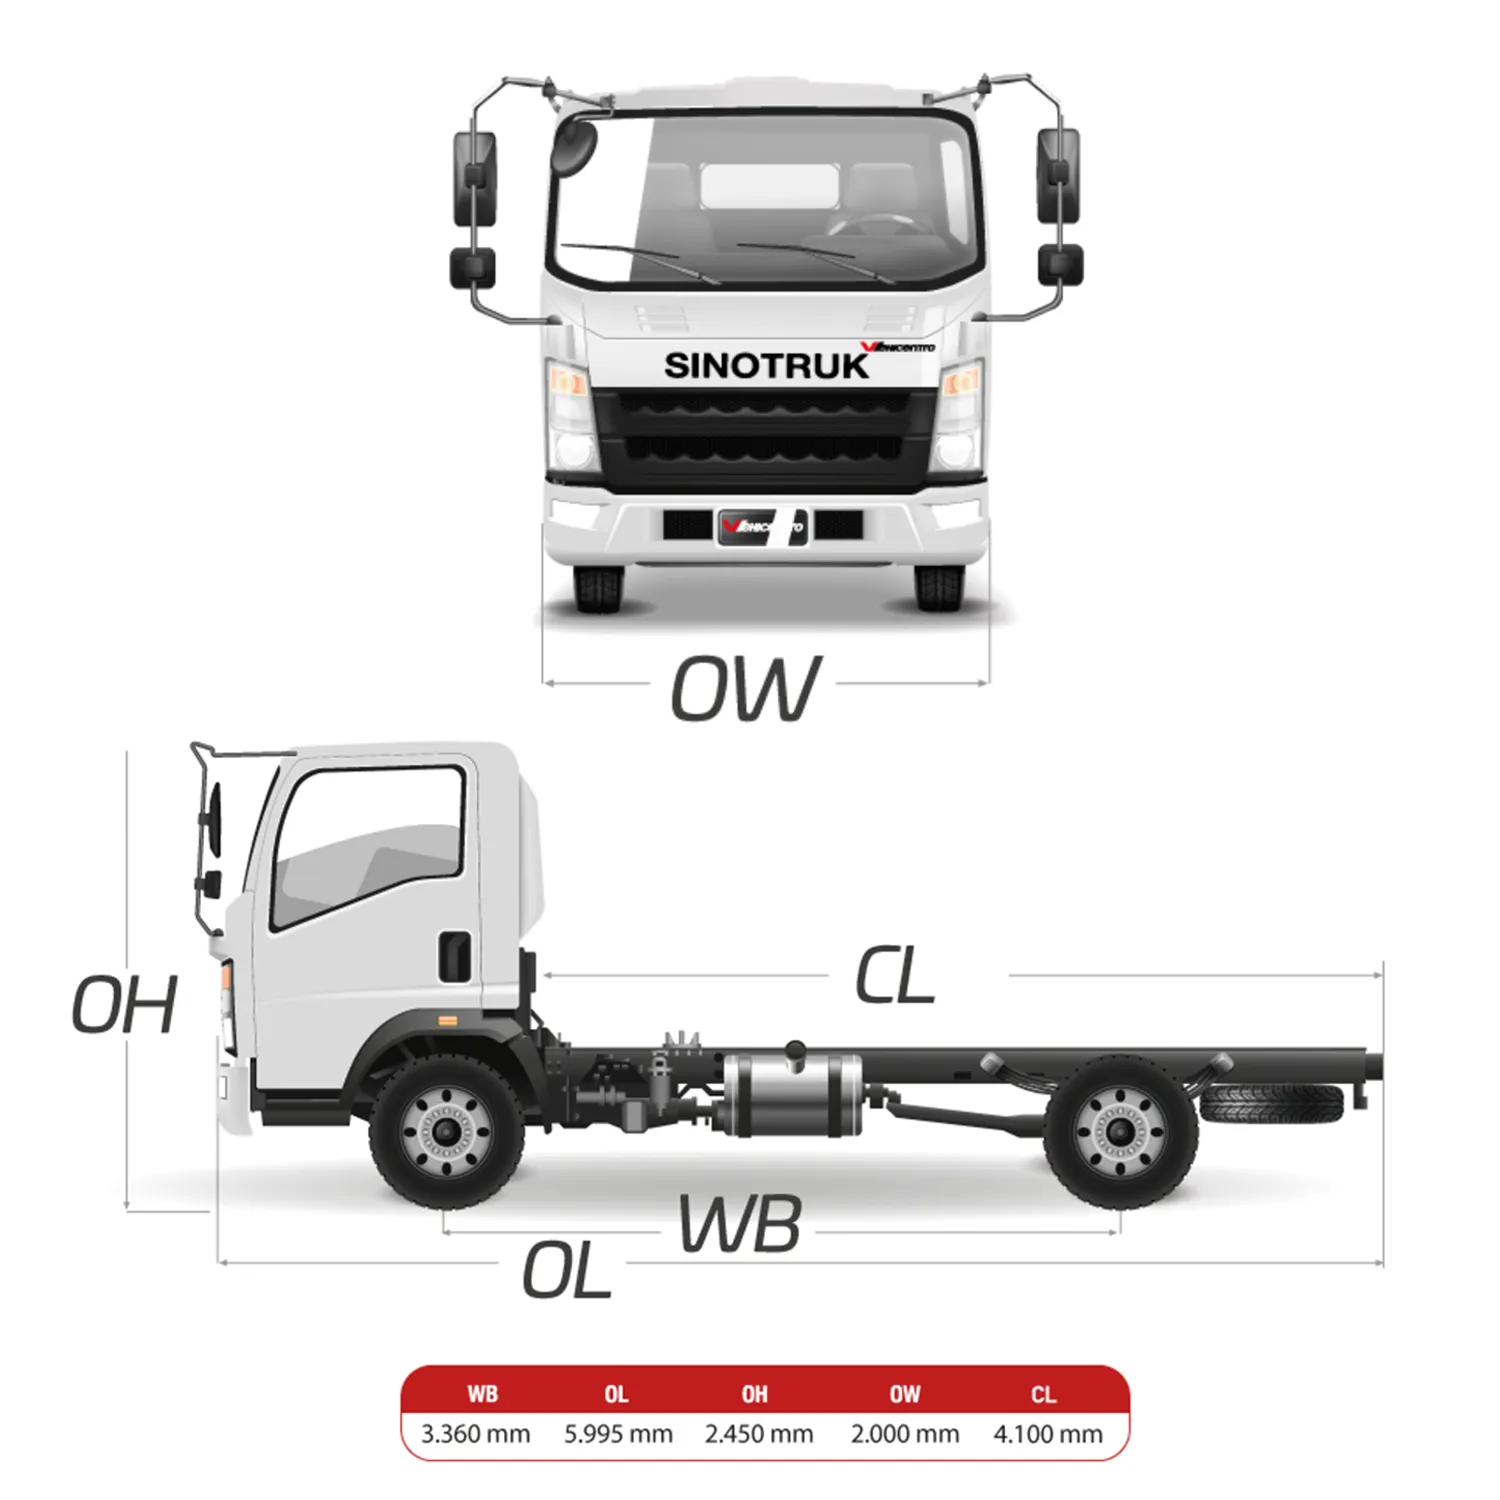 dimensiones-de-camion-de-3.5-toneladas-sinotruk-responsive